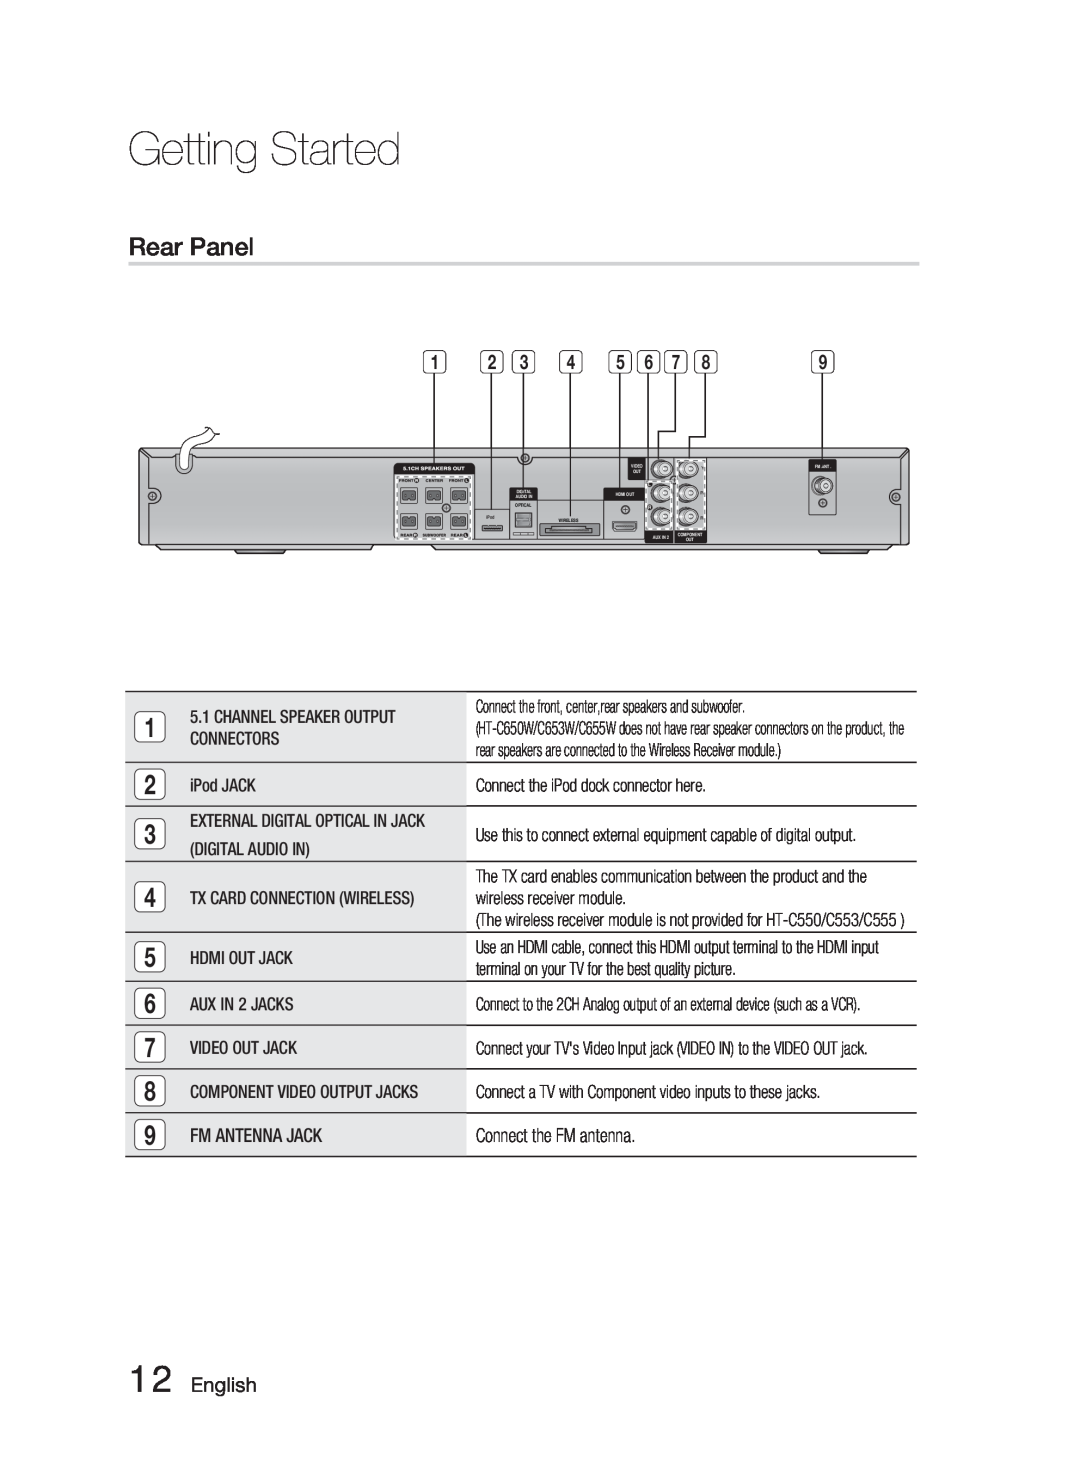 Samsung HT-C550-XAC user manual Rear Panel, English, Getting Started 